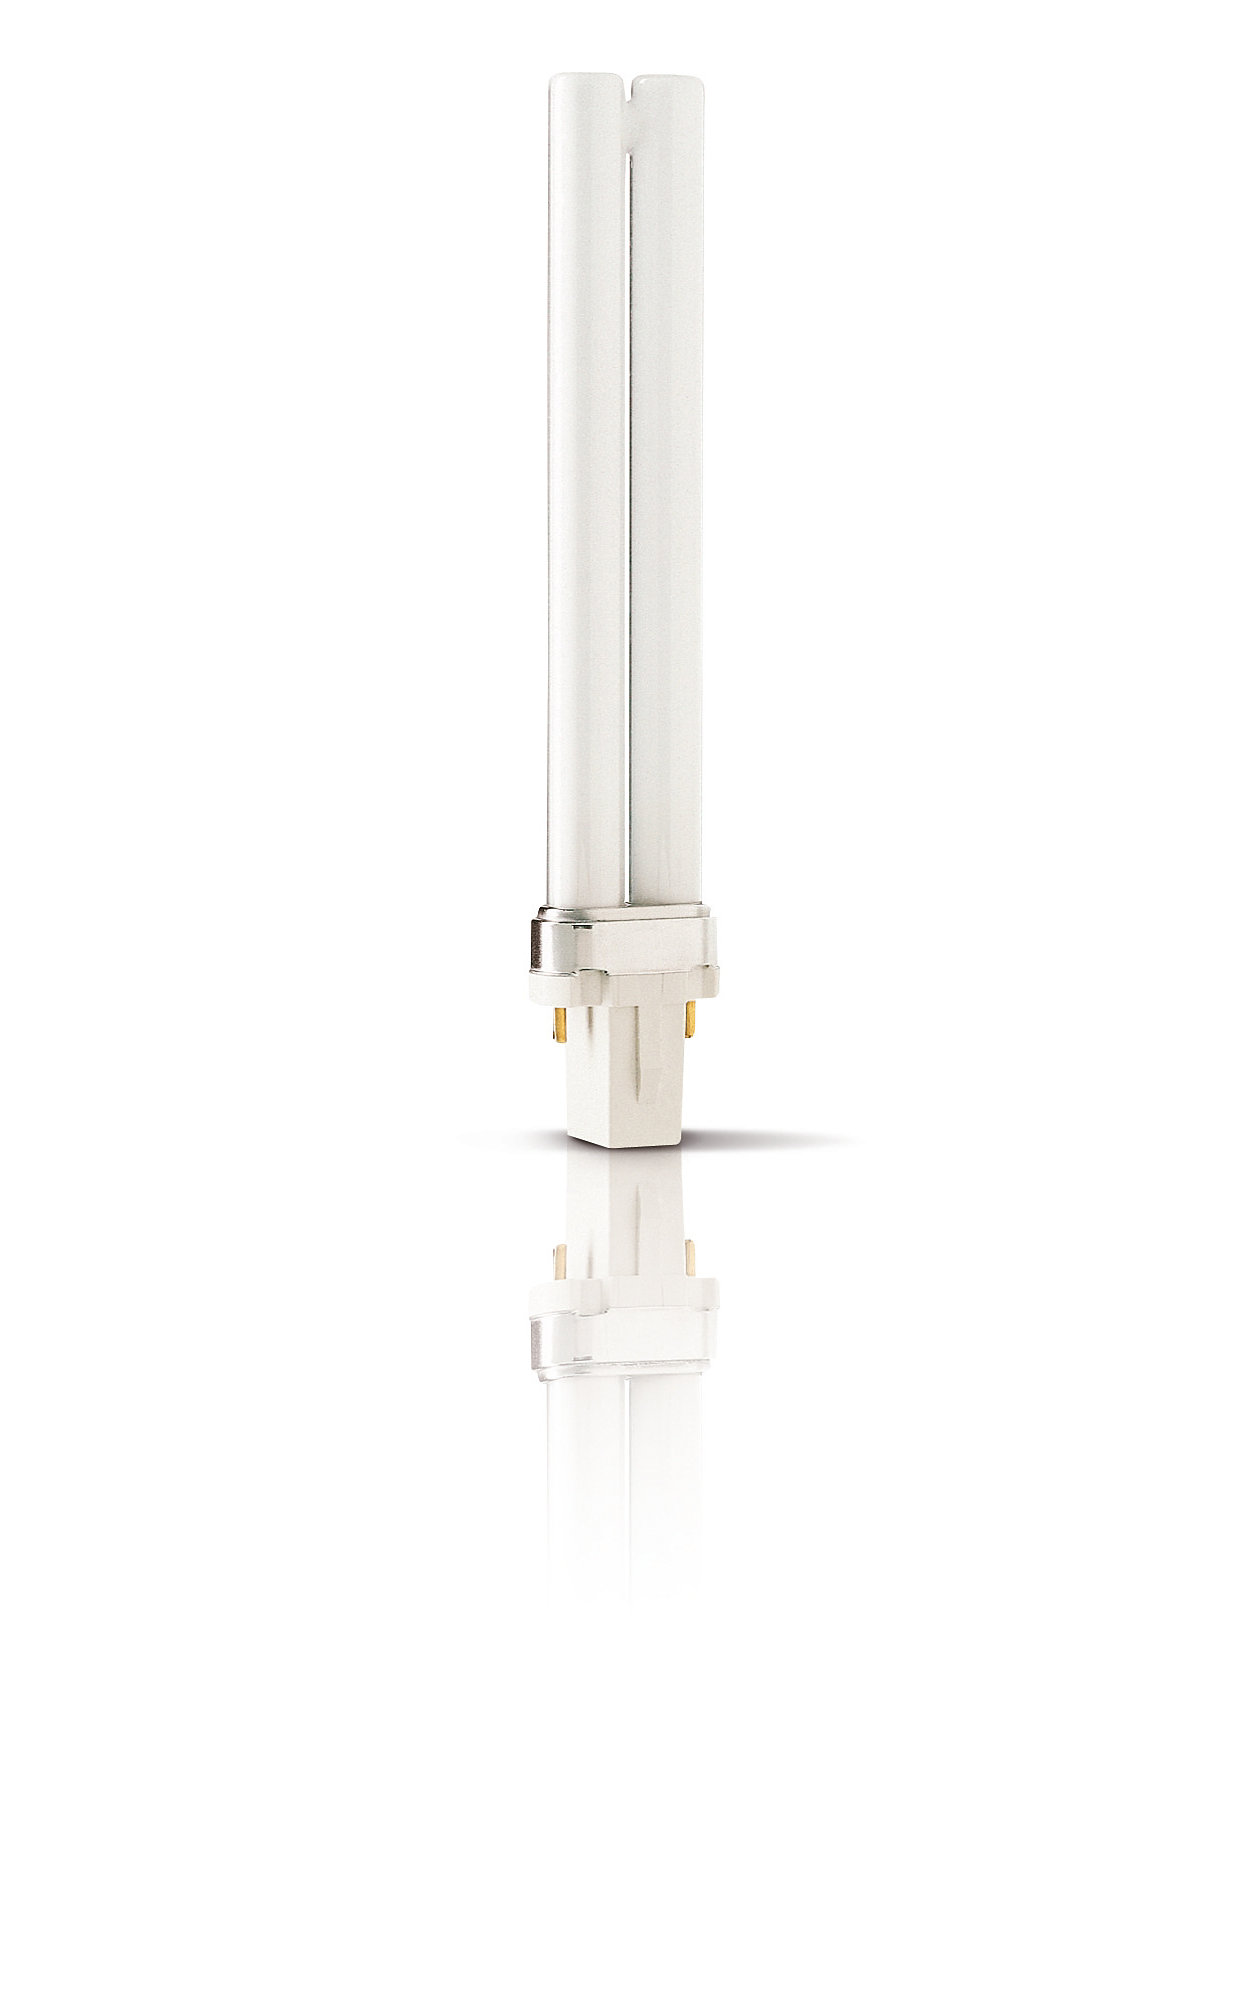 UVB PL-L/PL-S - Efficient & compact UVB NB lamps